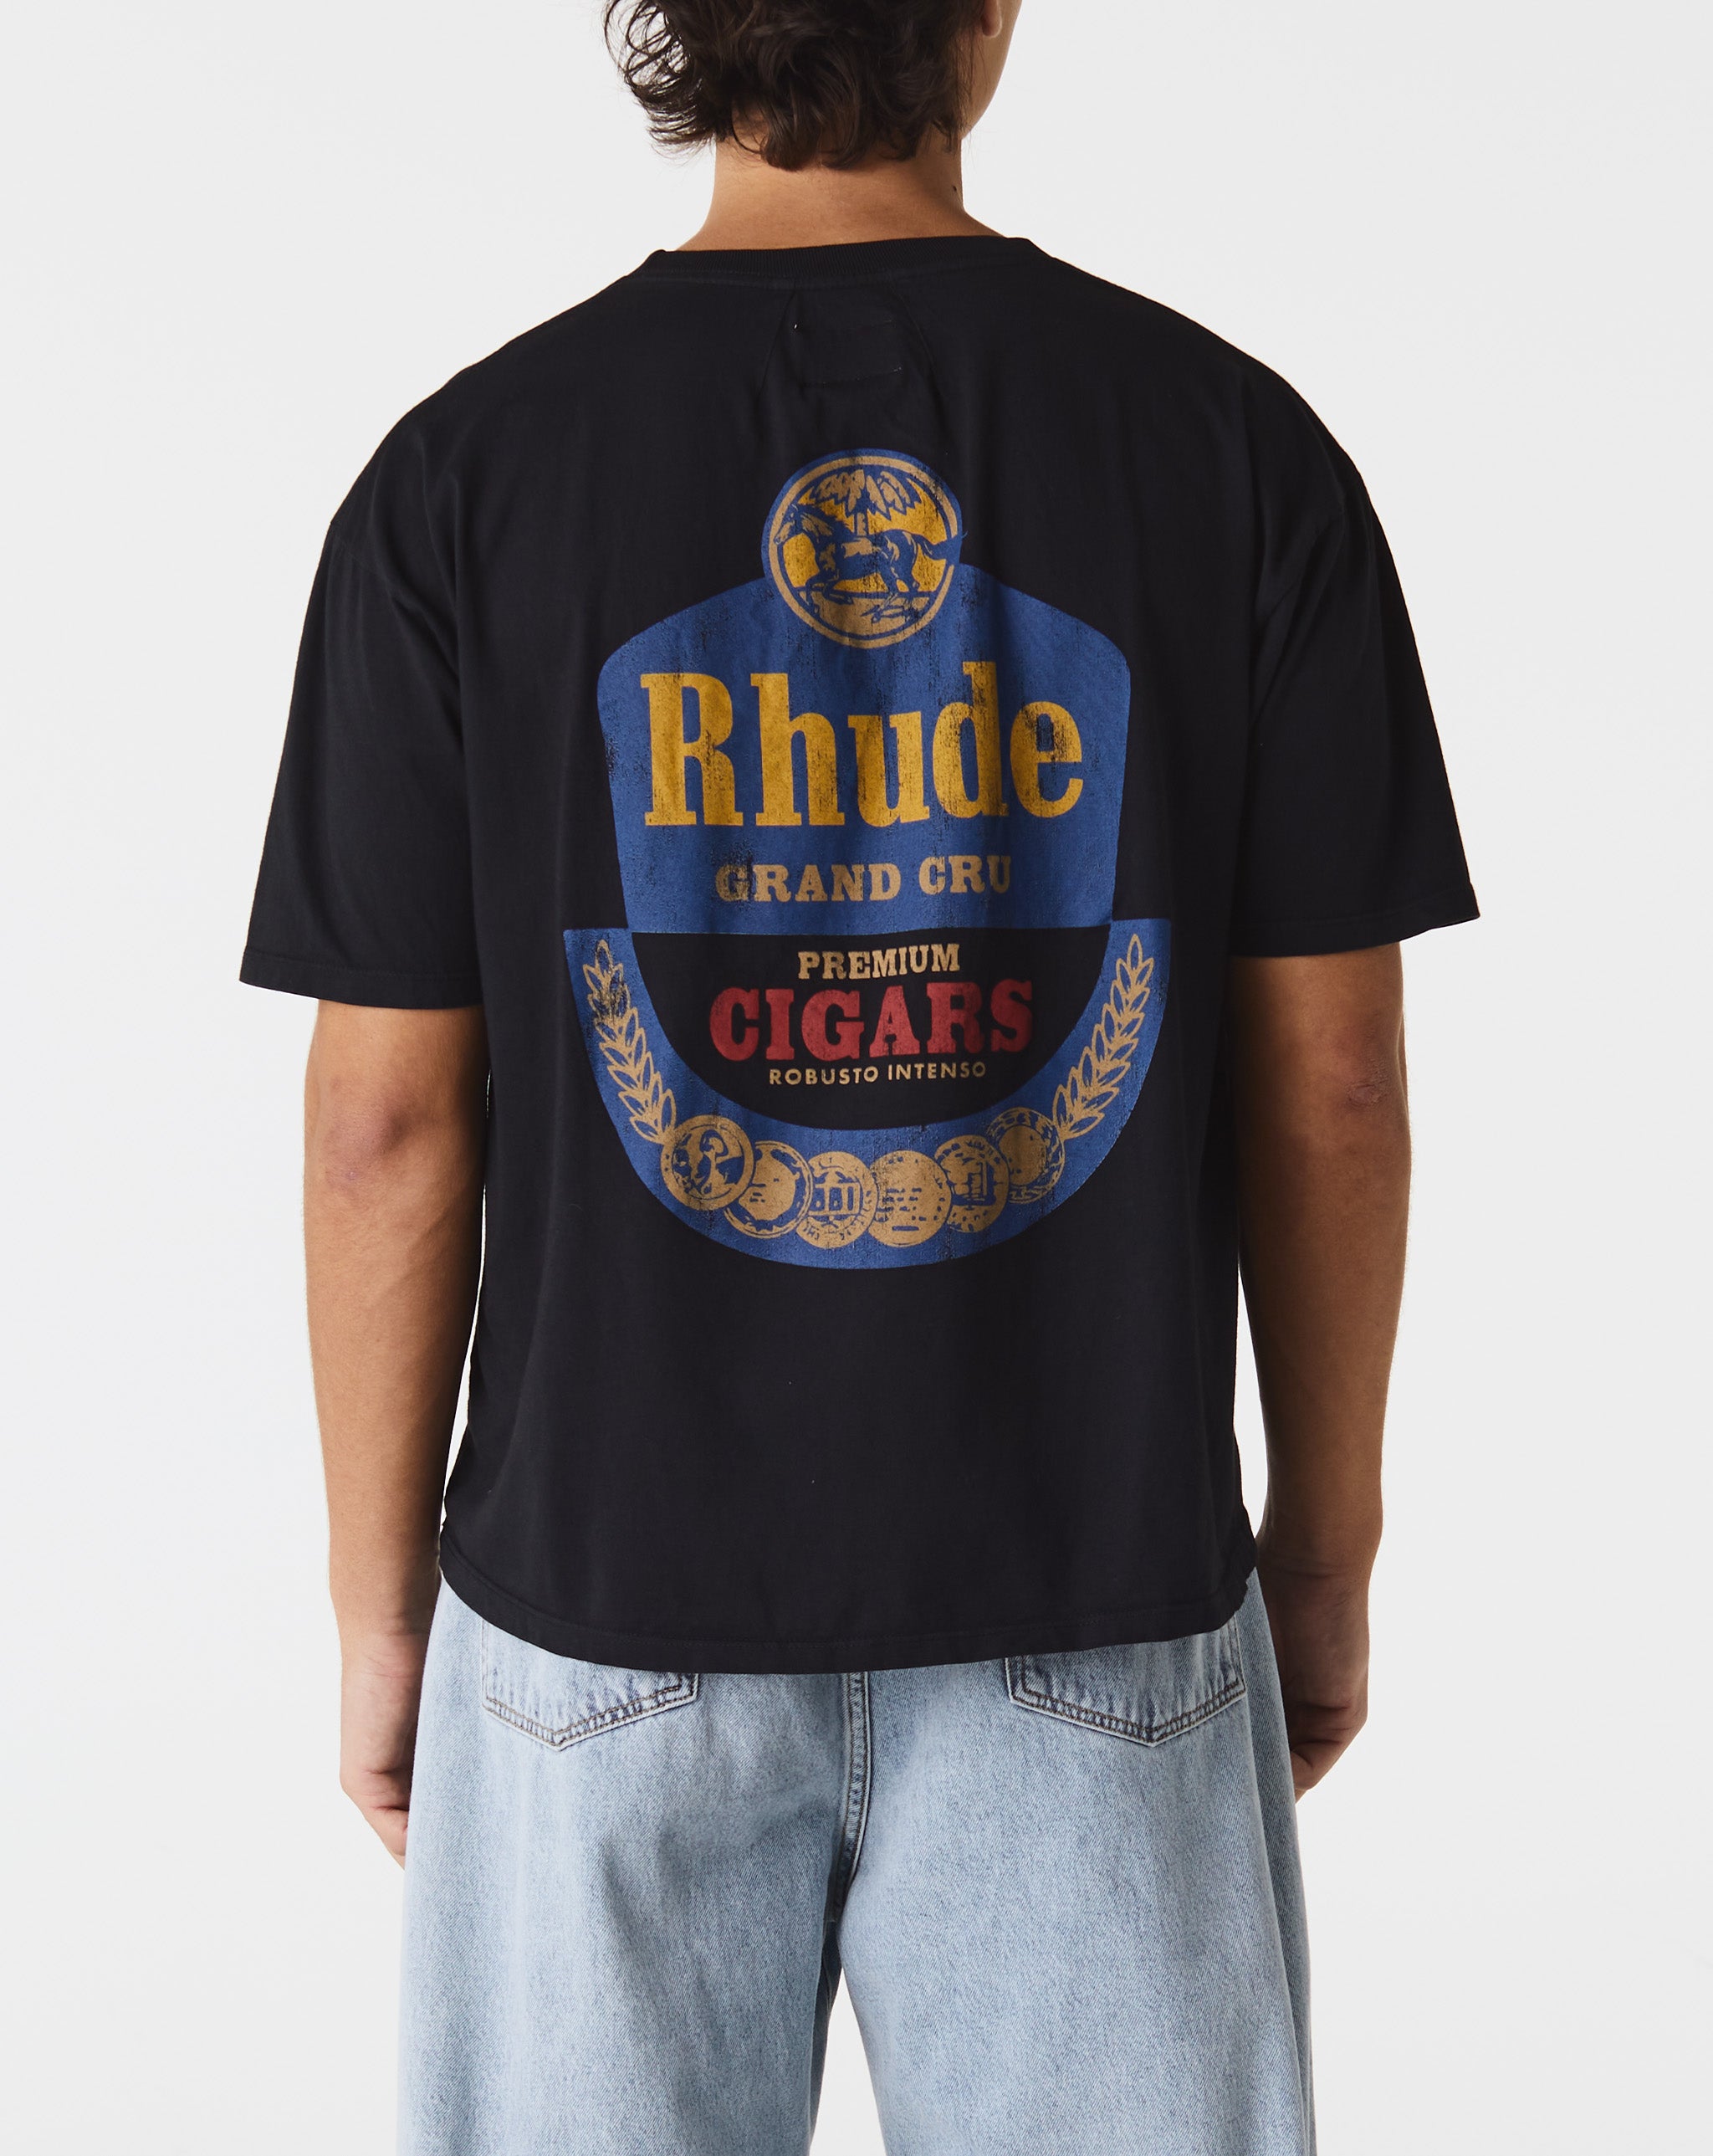 Rhude Grand Cru T-Shirt  - XHIBITION